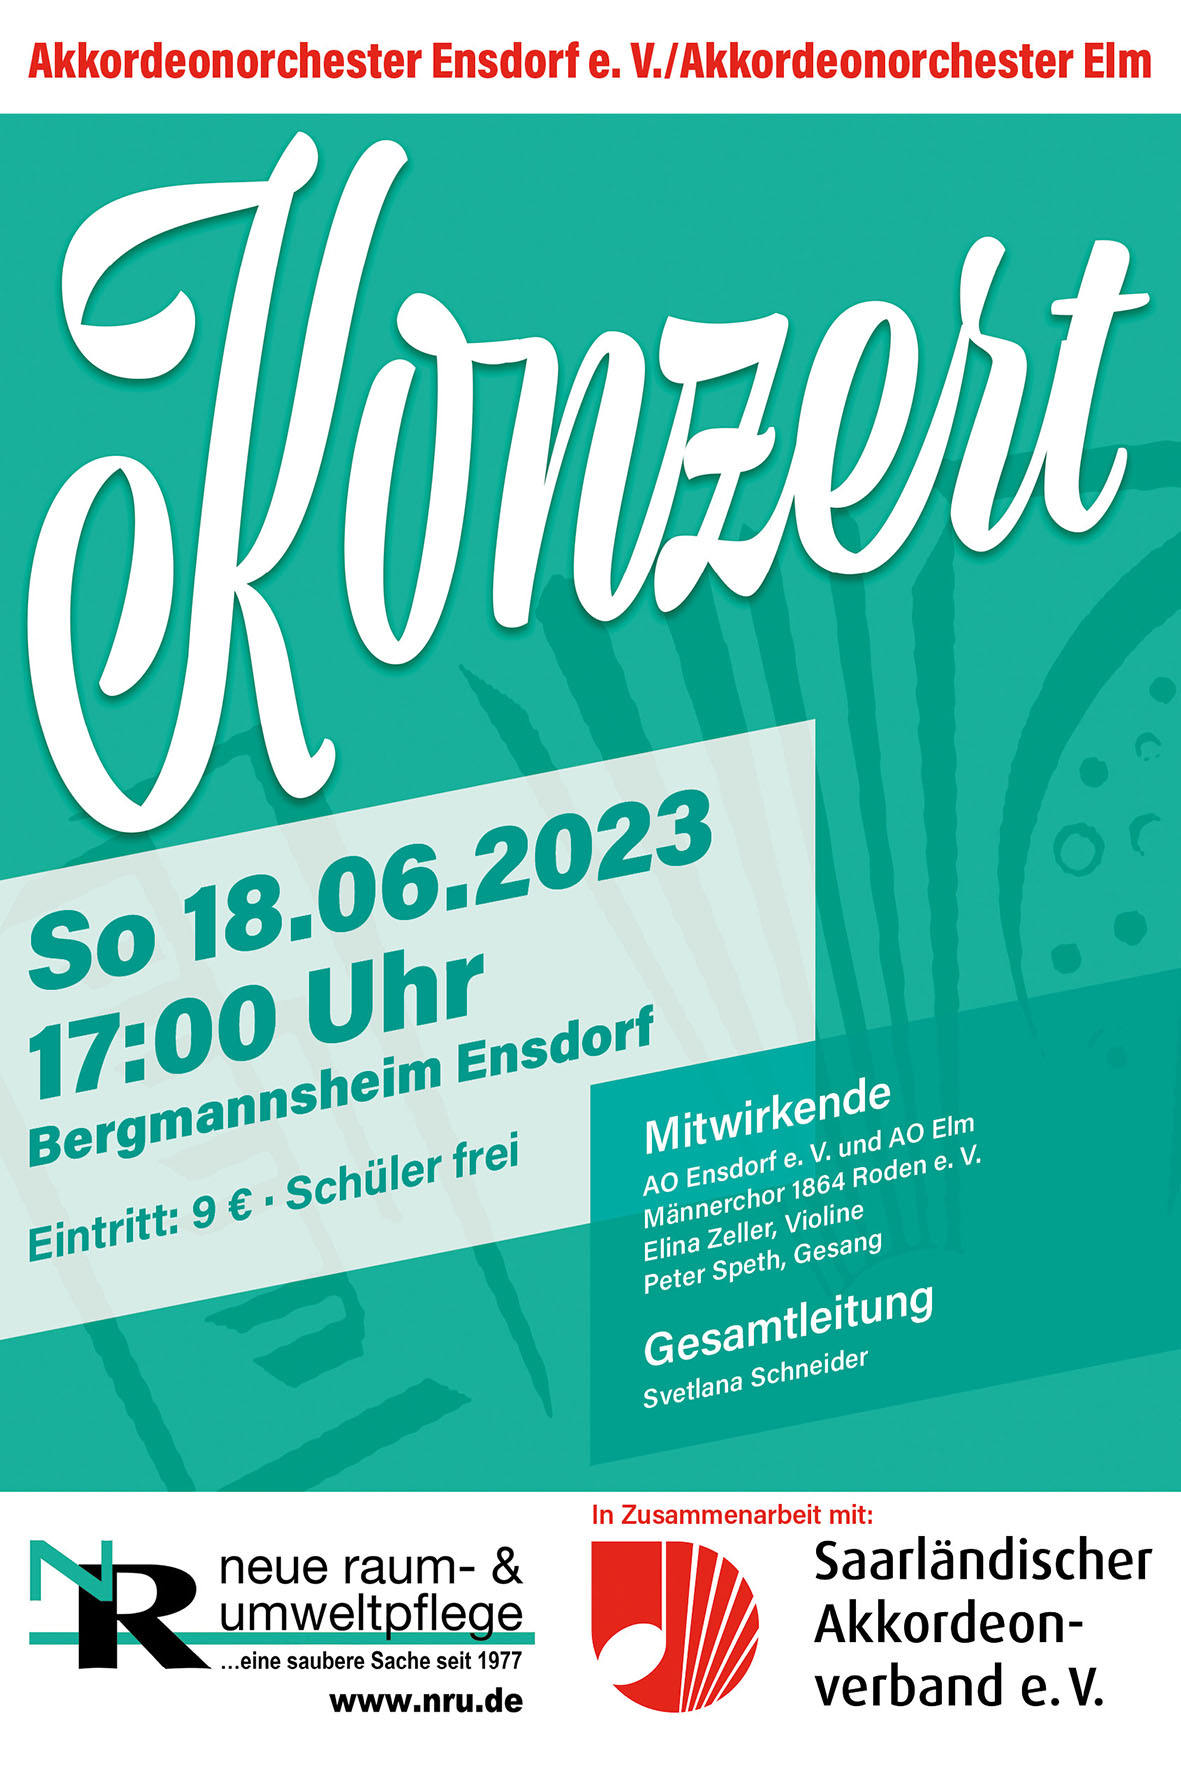 Plakat Akkordeonorchester Ensdorf-Elm